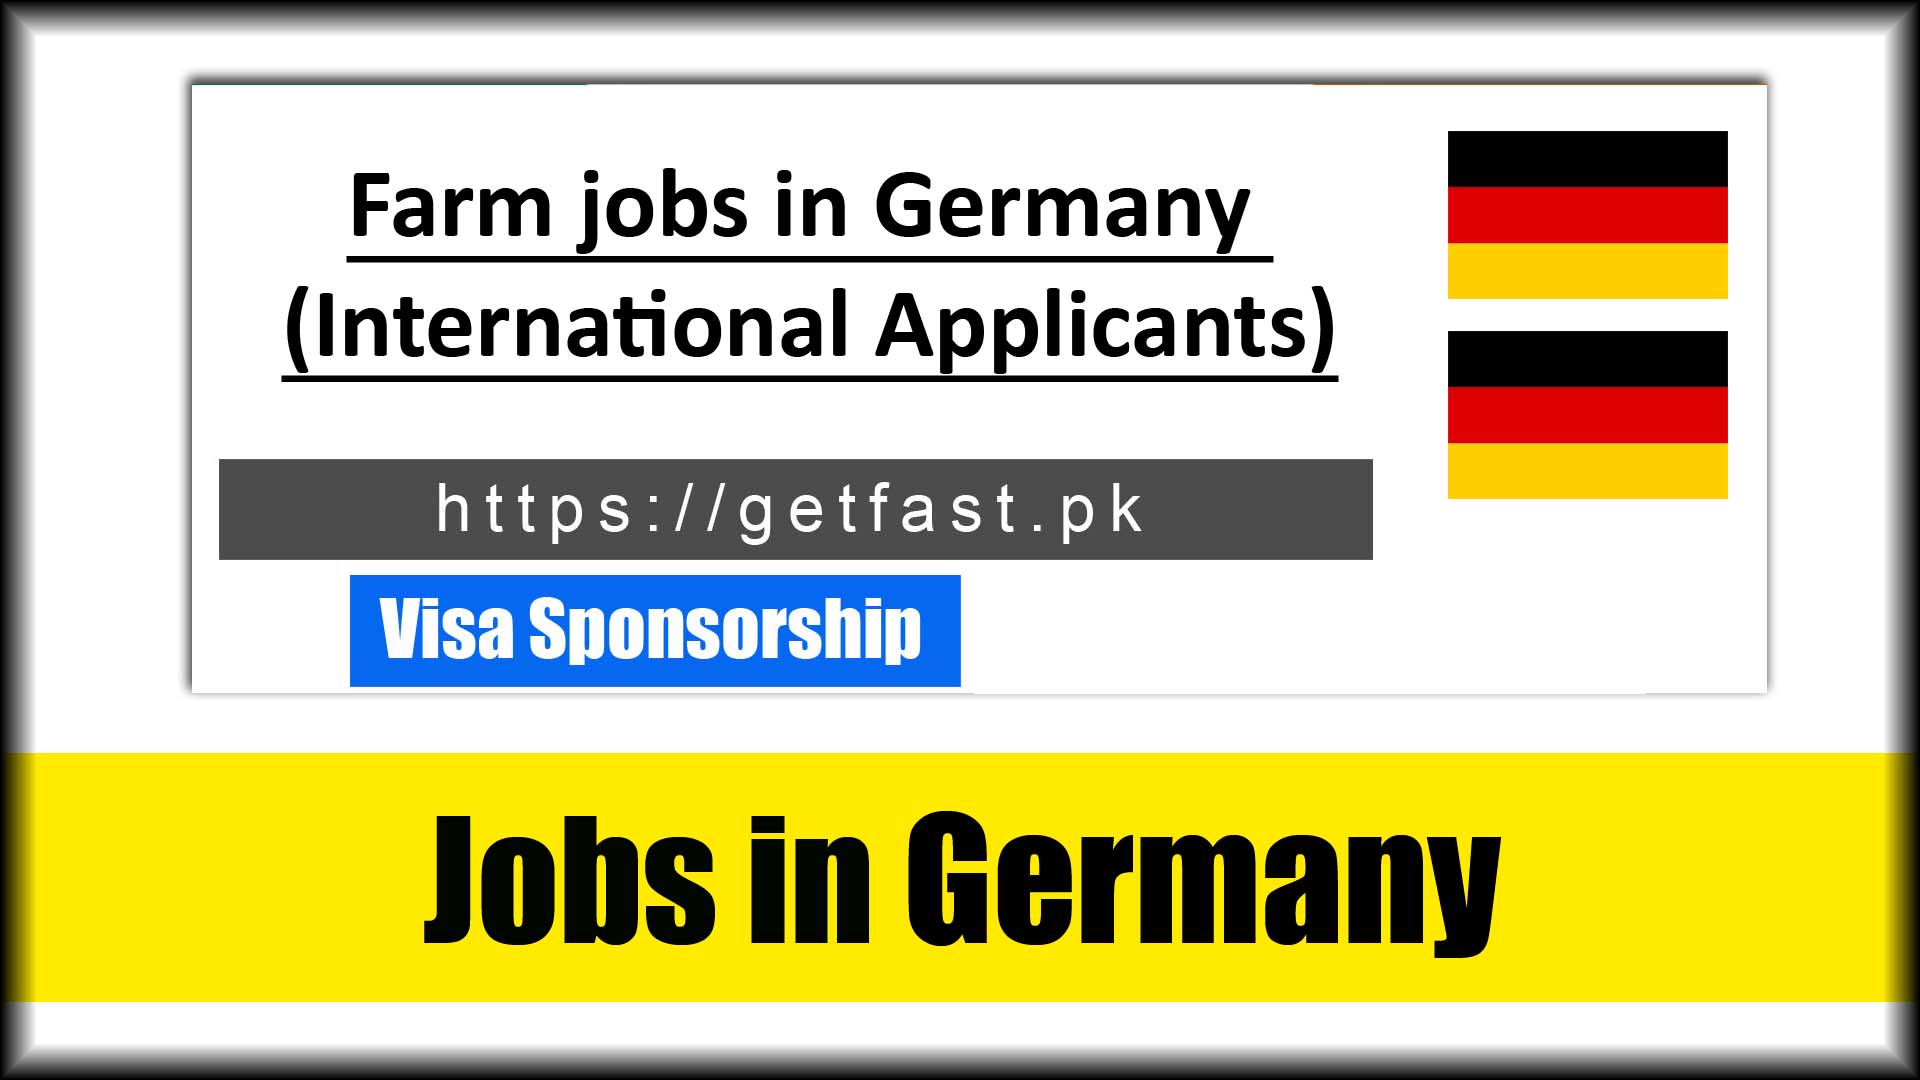 Farm jobs in Germany with visa sponsorship (International Applicants)